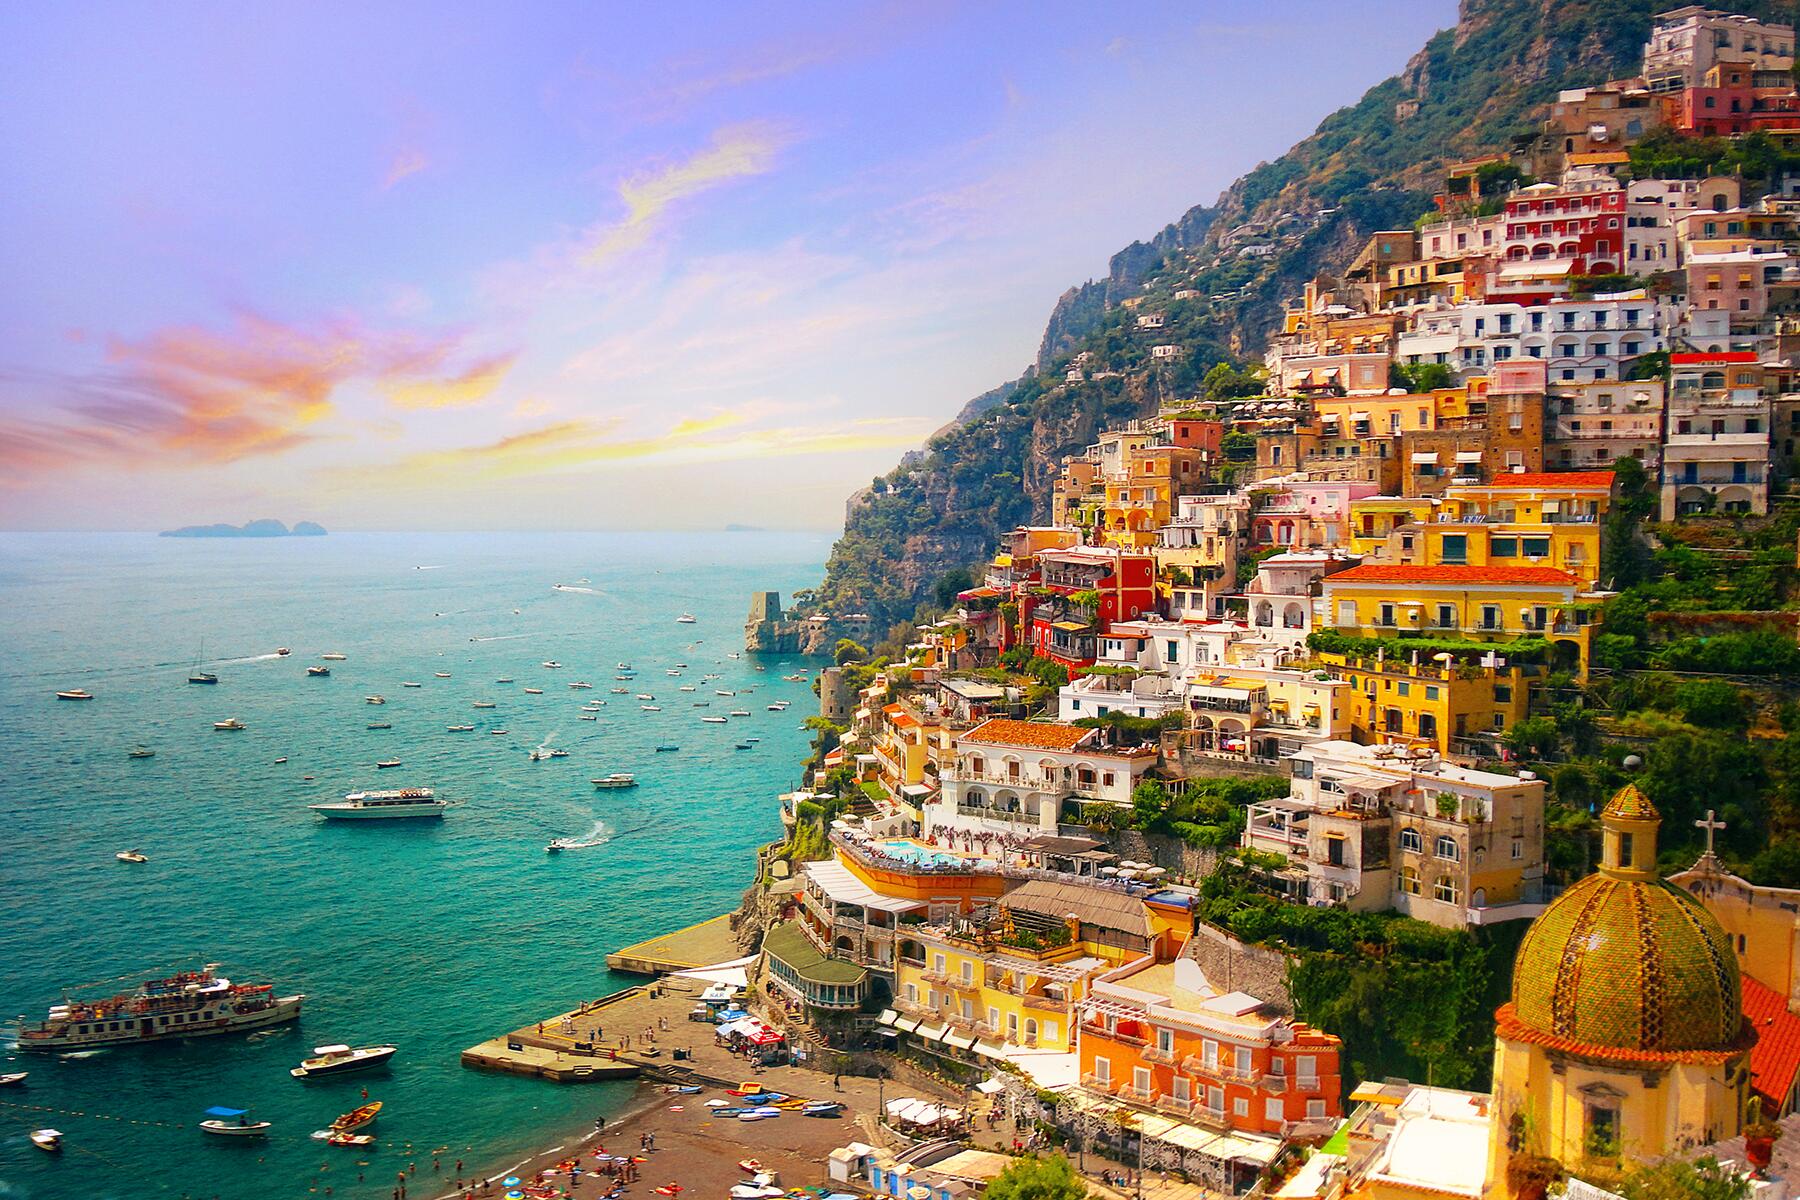 Should I Travel to Amalfi Coast in the Summer?